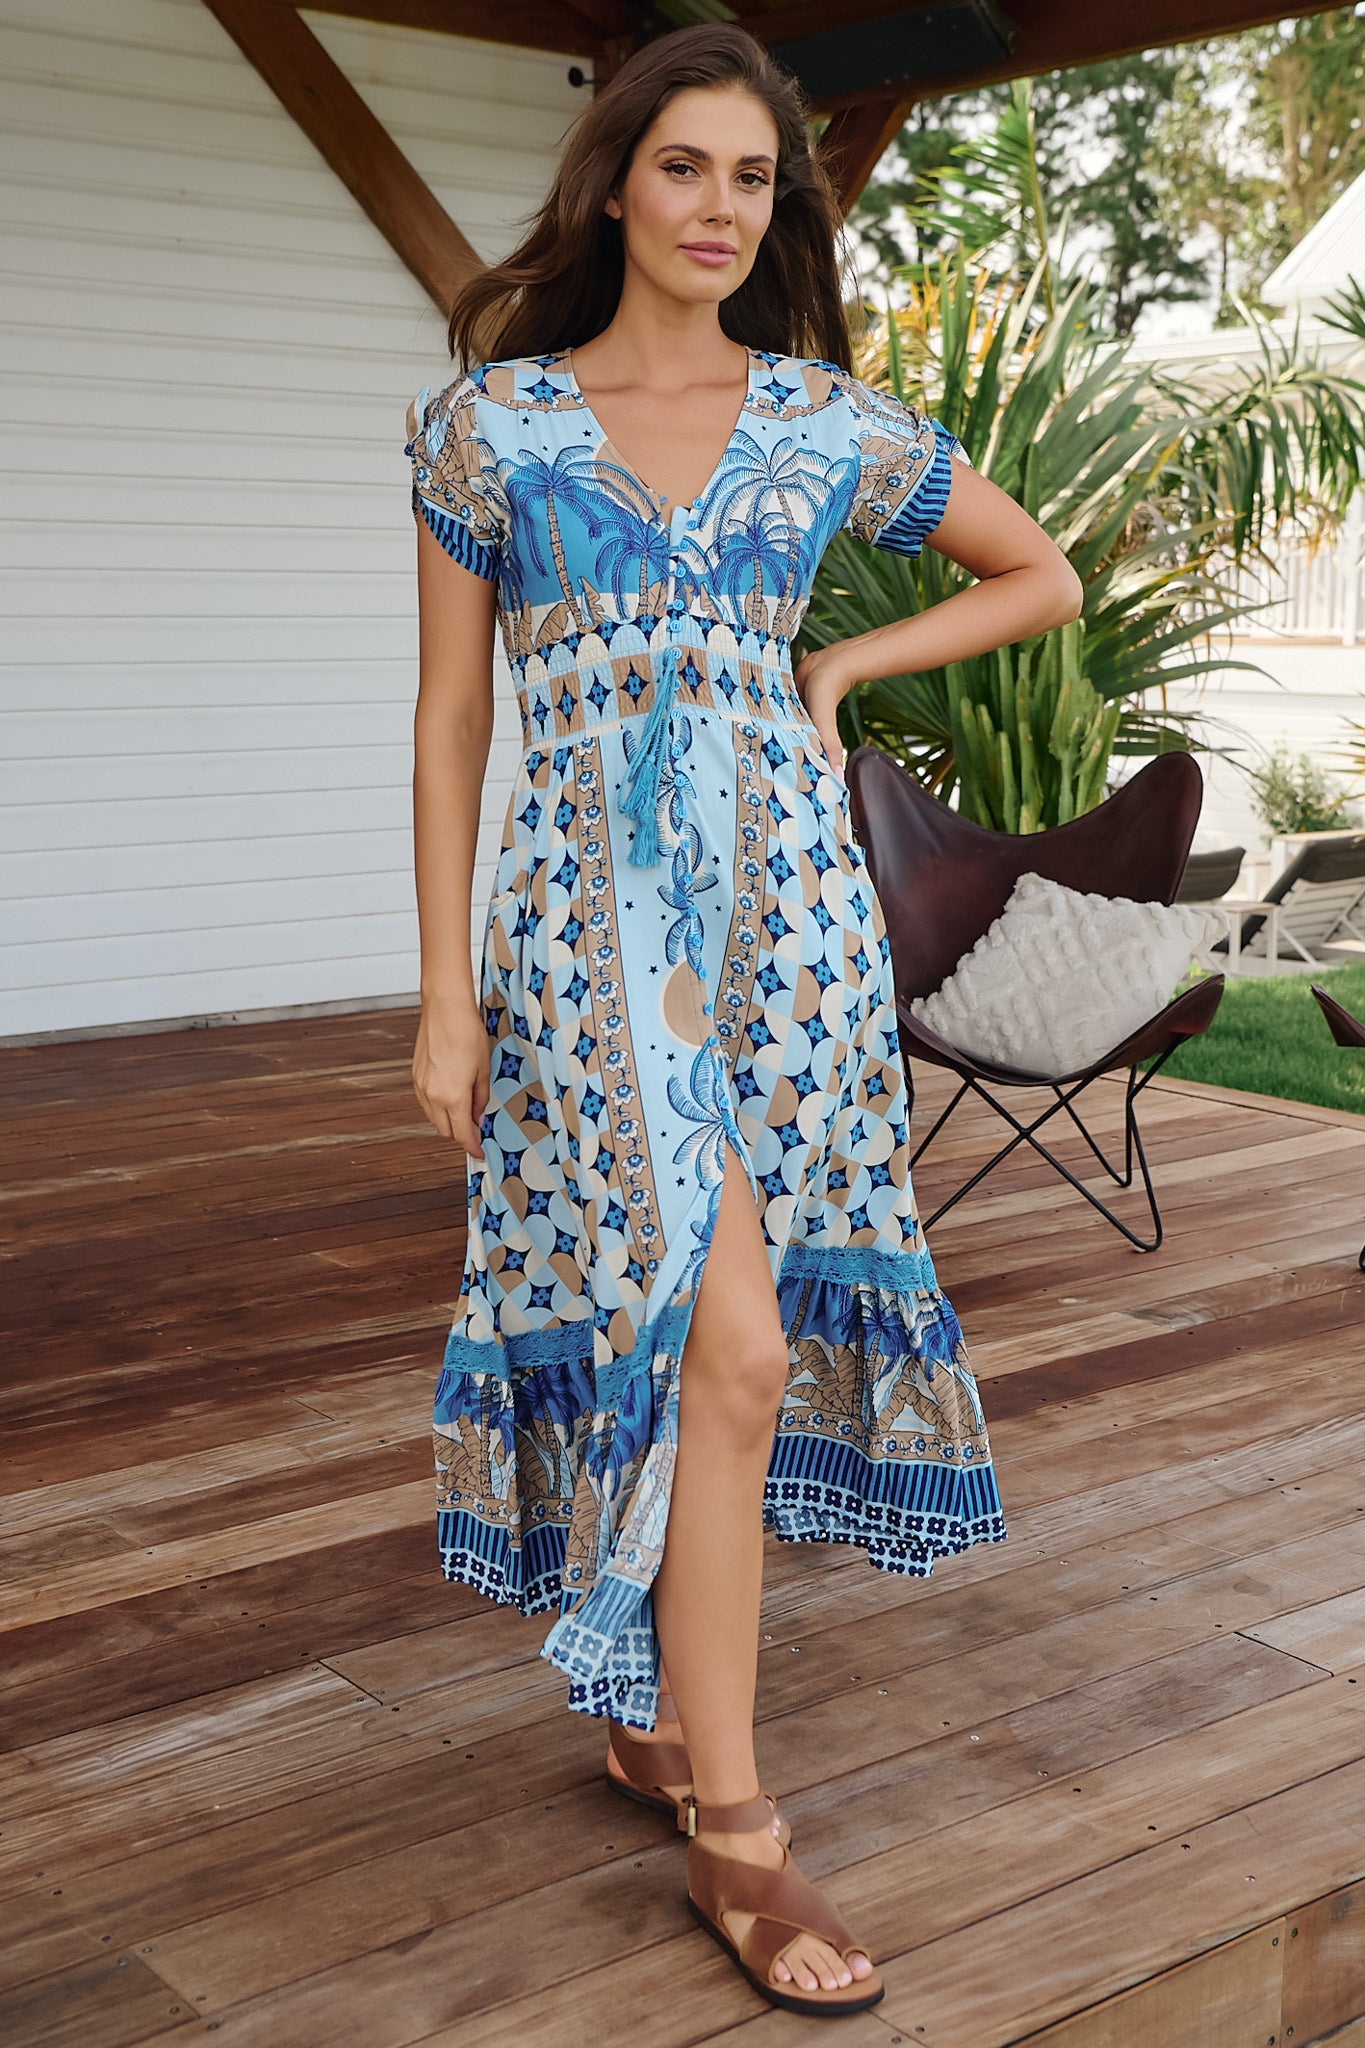 JAASE - Celeste Maxi Dress: Tie Cap Sleeve Button Down Dress with Lace Trim in Saphire Sands Print